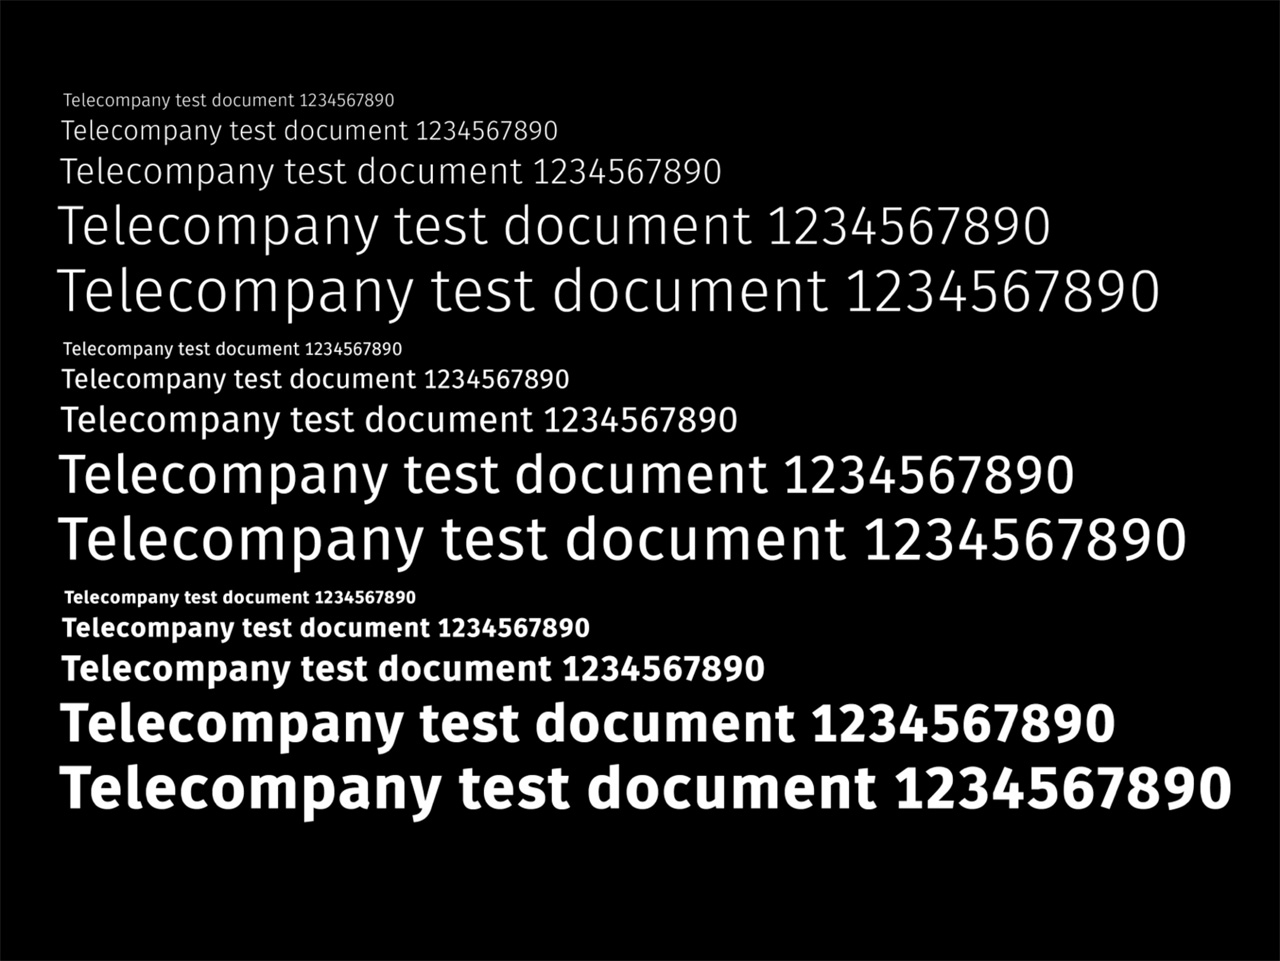 6 Telecompany test document